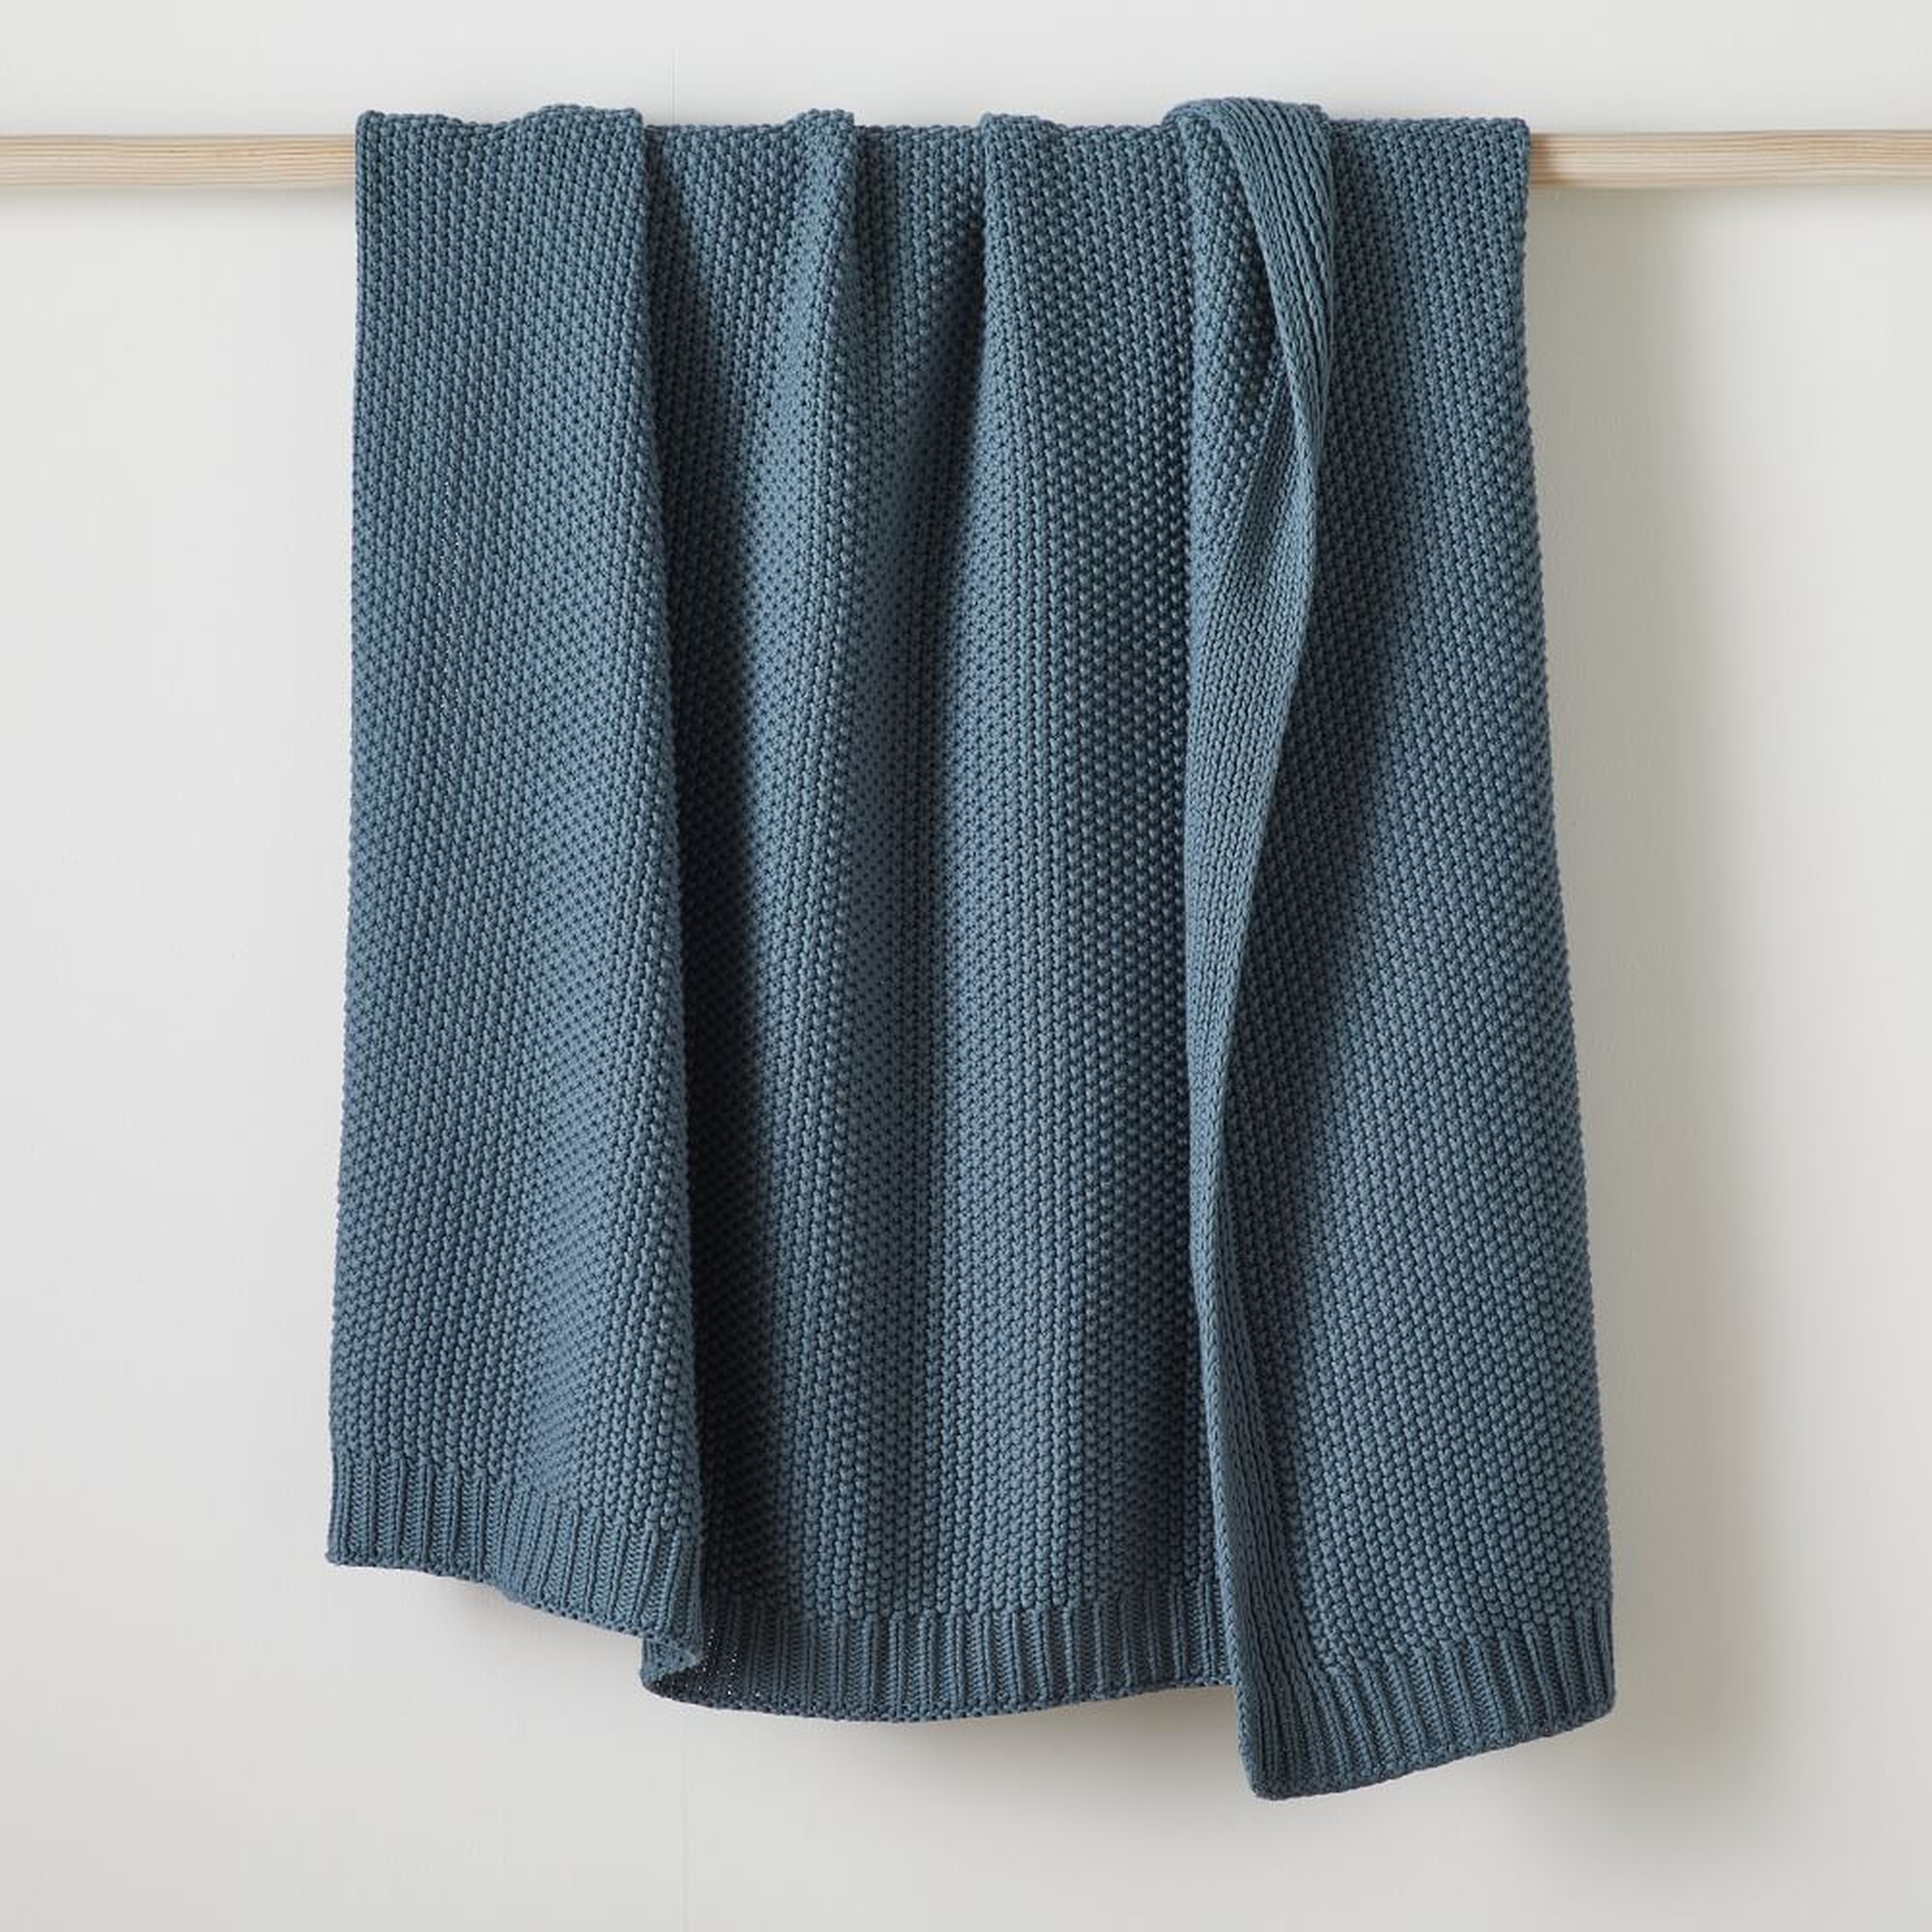 Cotton Knit Throw, Mineral Blue, 50"x60" - West Elm